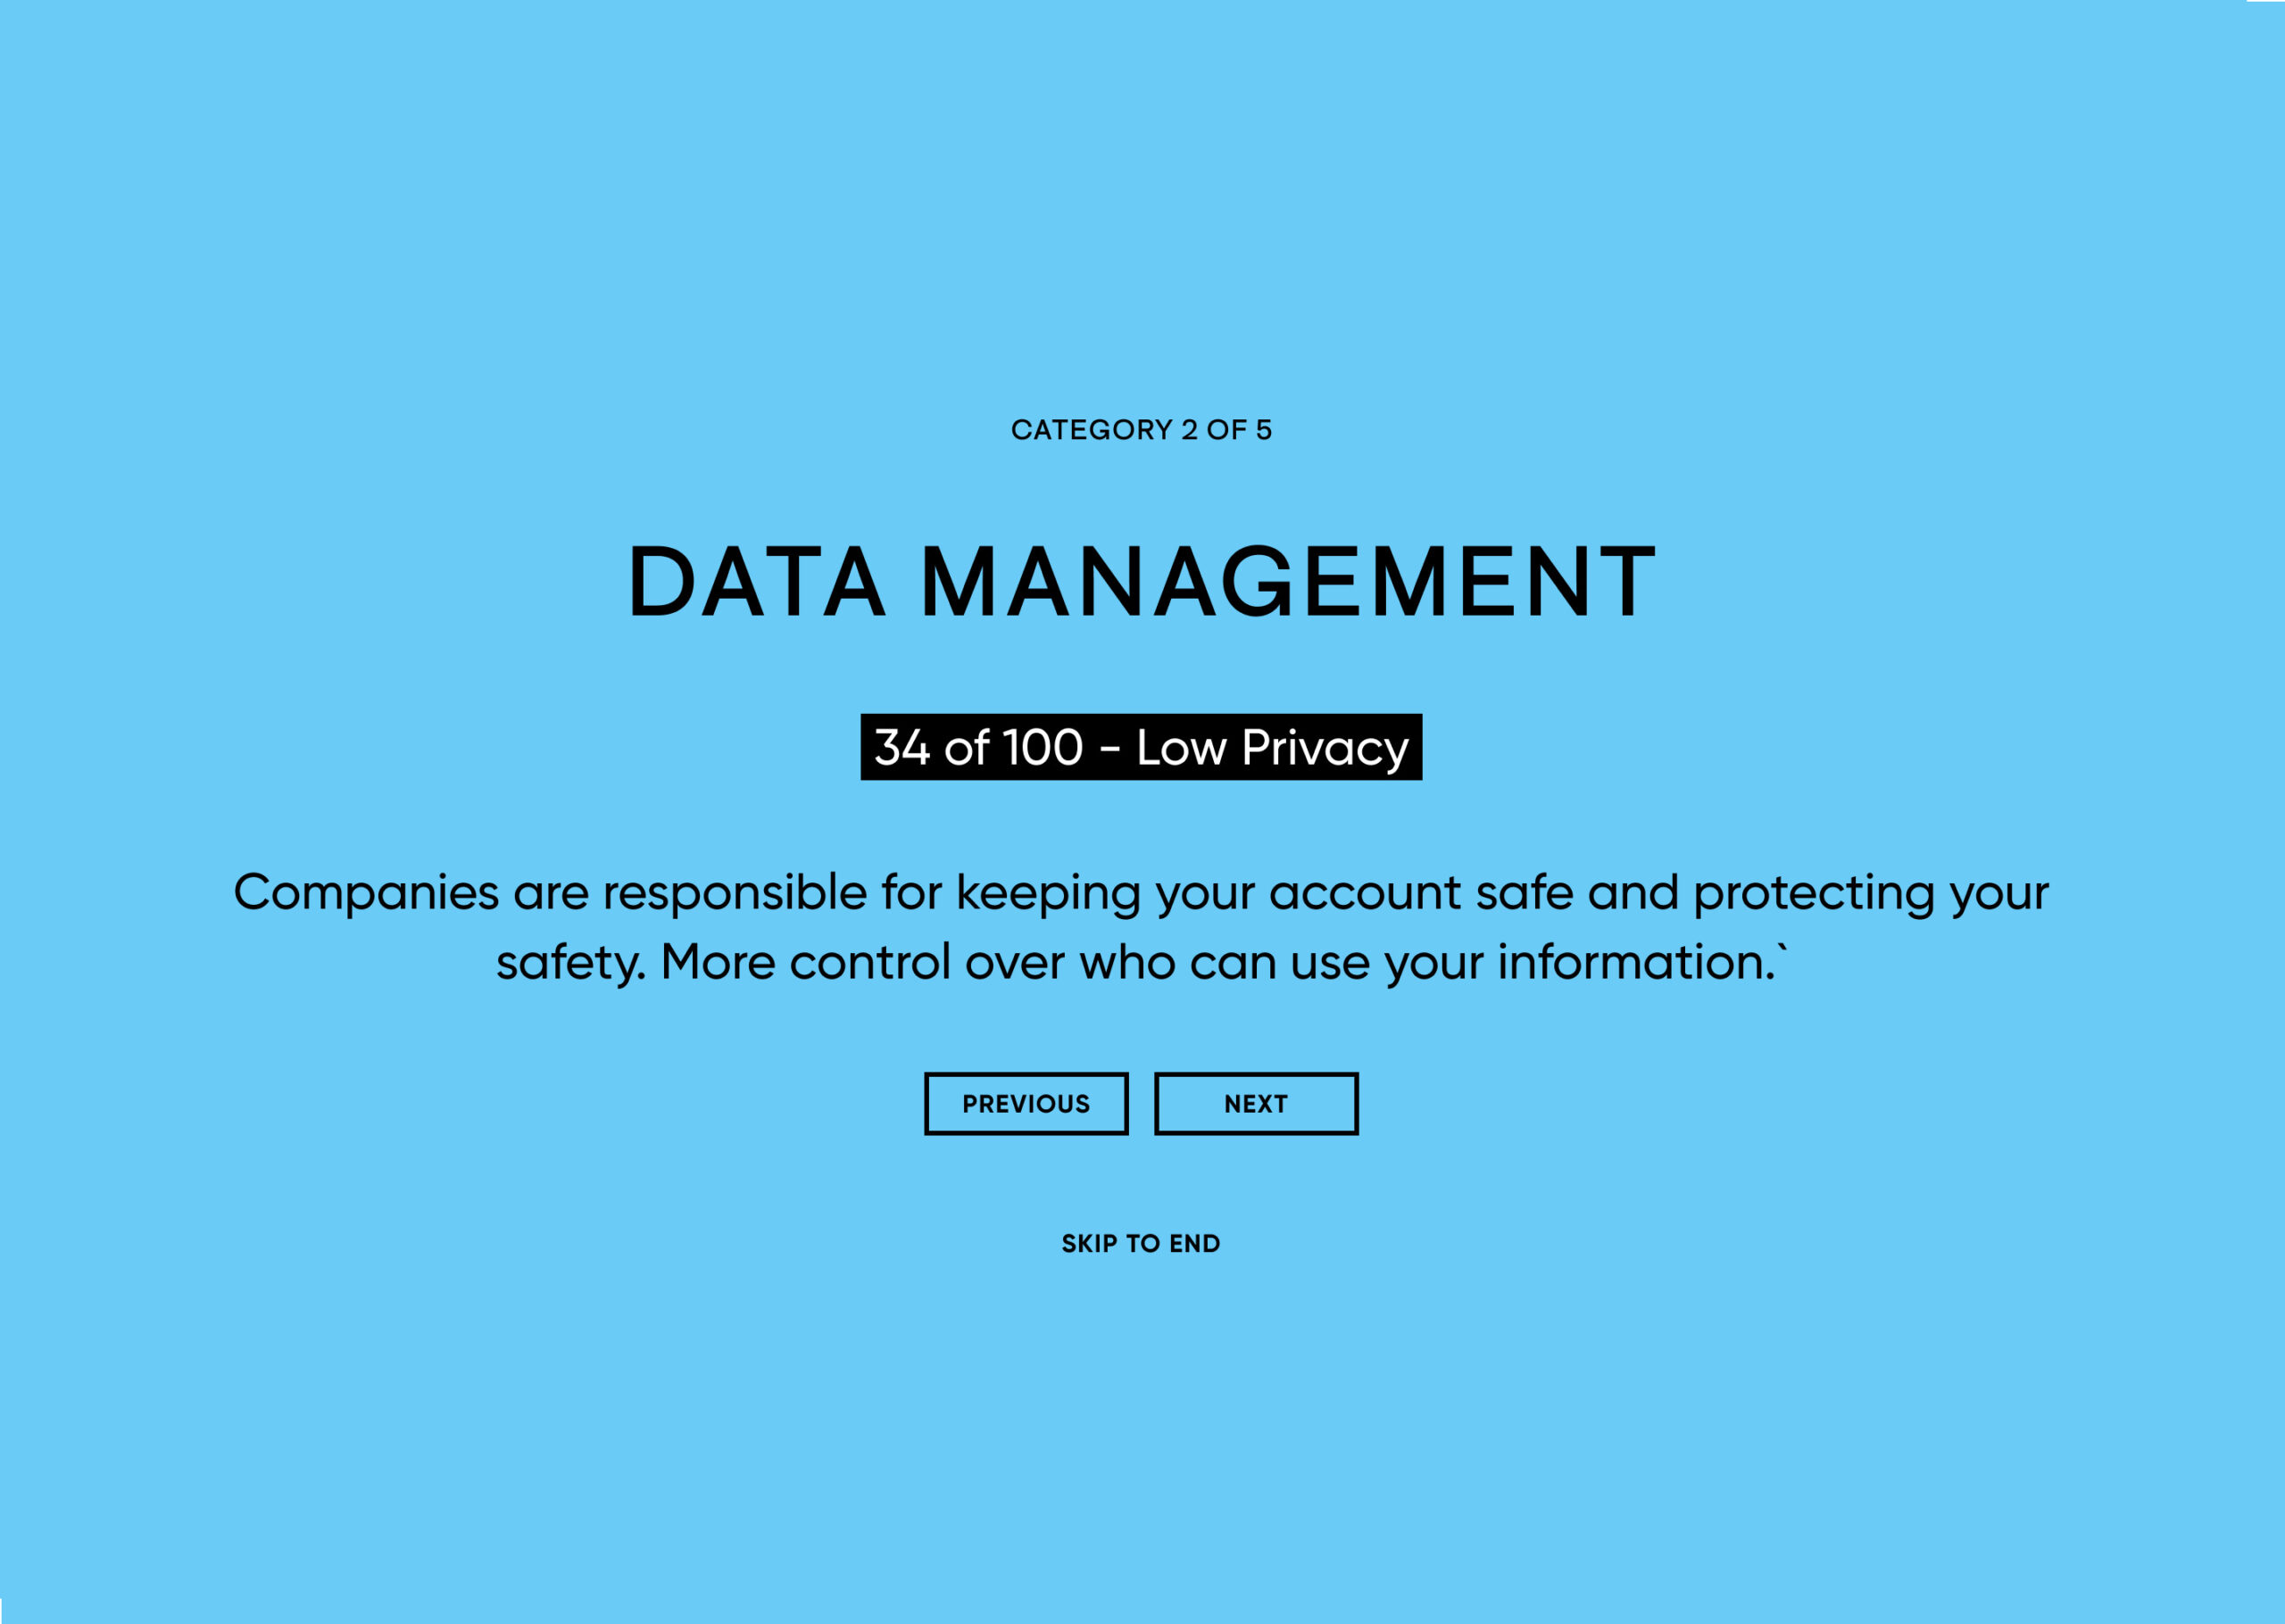 2 – Data Management